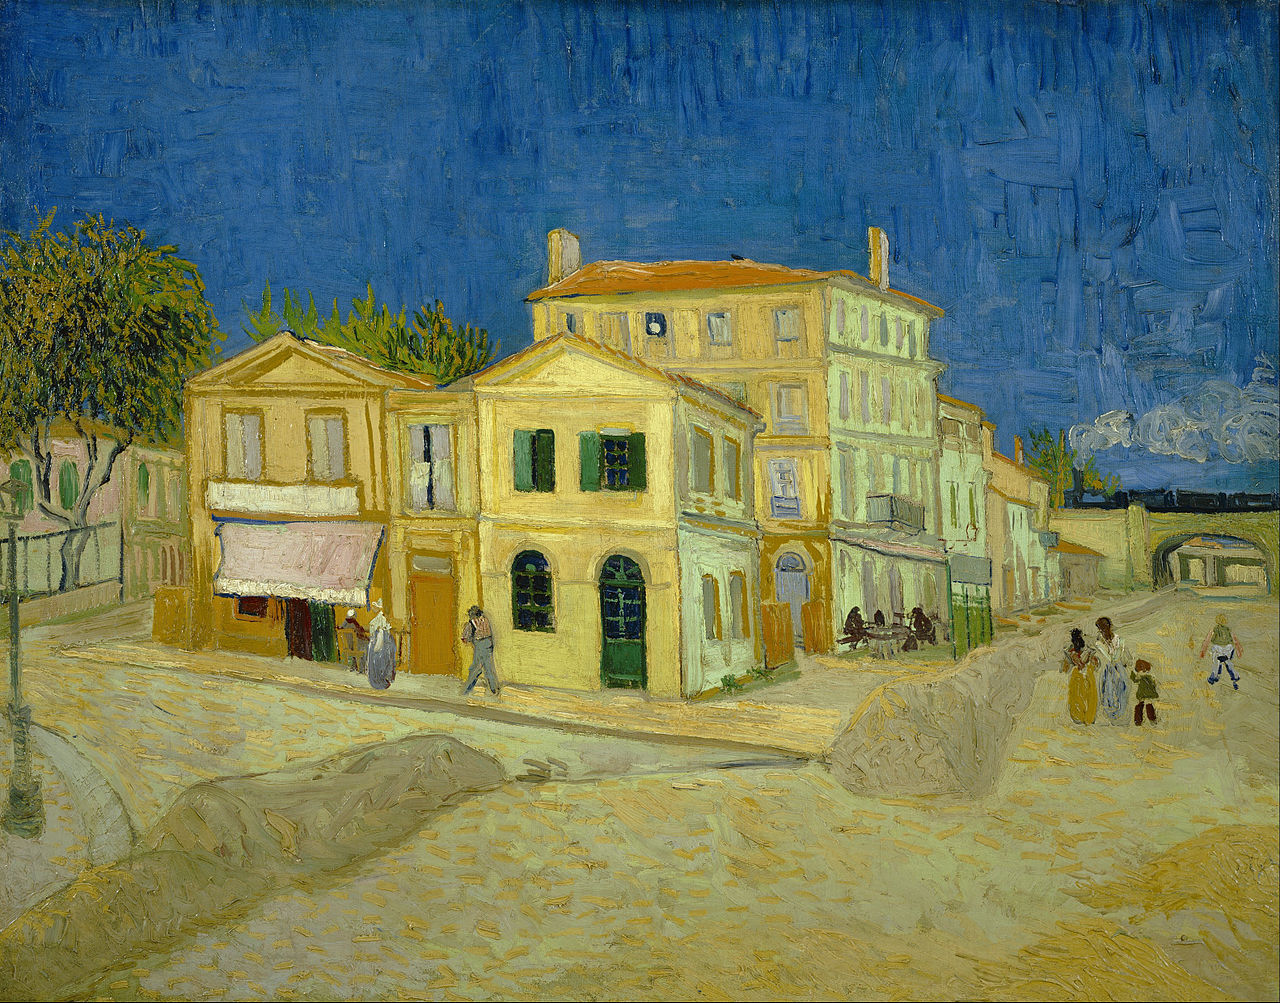 Van Gogh, viaggio esotico fra i suoi libri, stampe e celebri